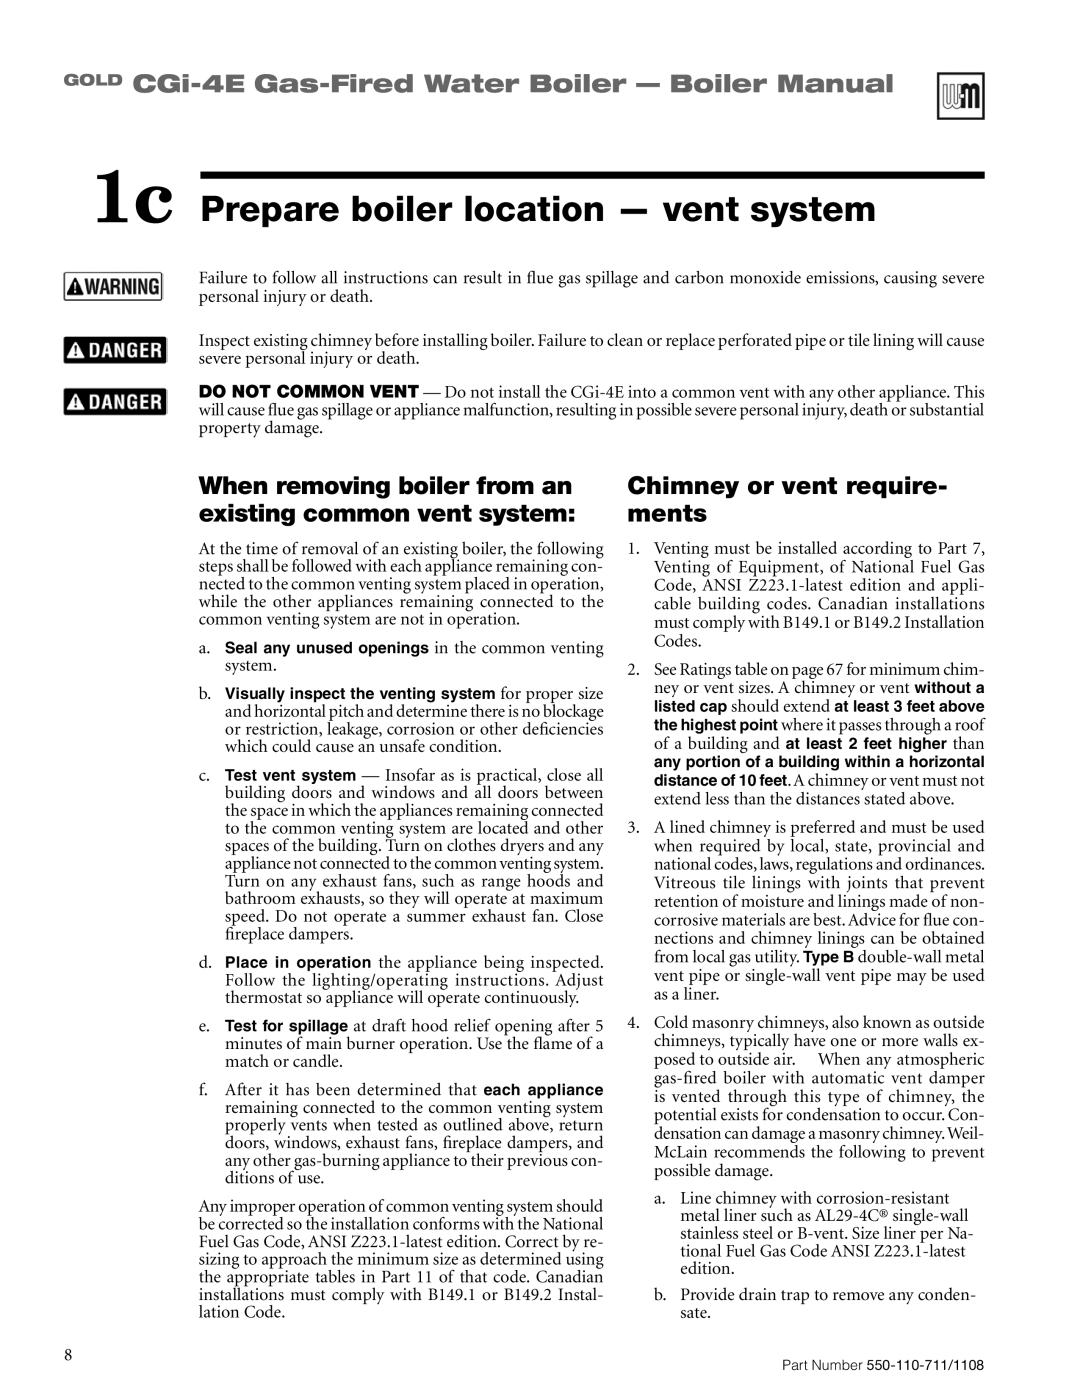 Weil-McLain CGI-4E manual 1c Prepare boiler location - vent system, GOLD CGi-4E Gas-FiredWater Boiler - Boiler Manual 